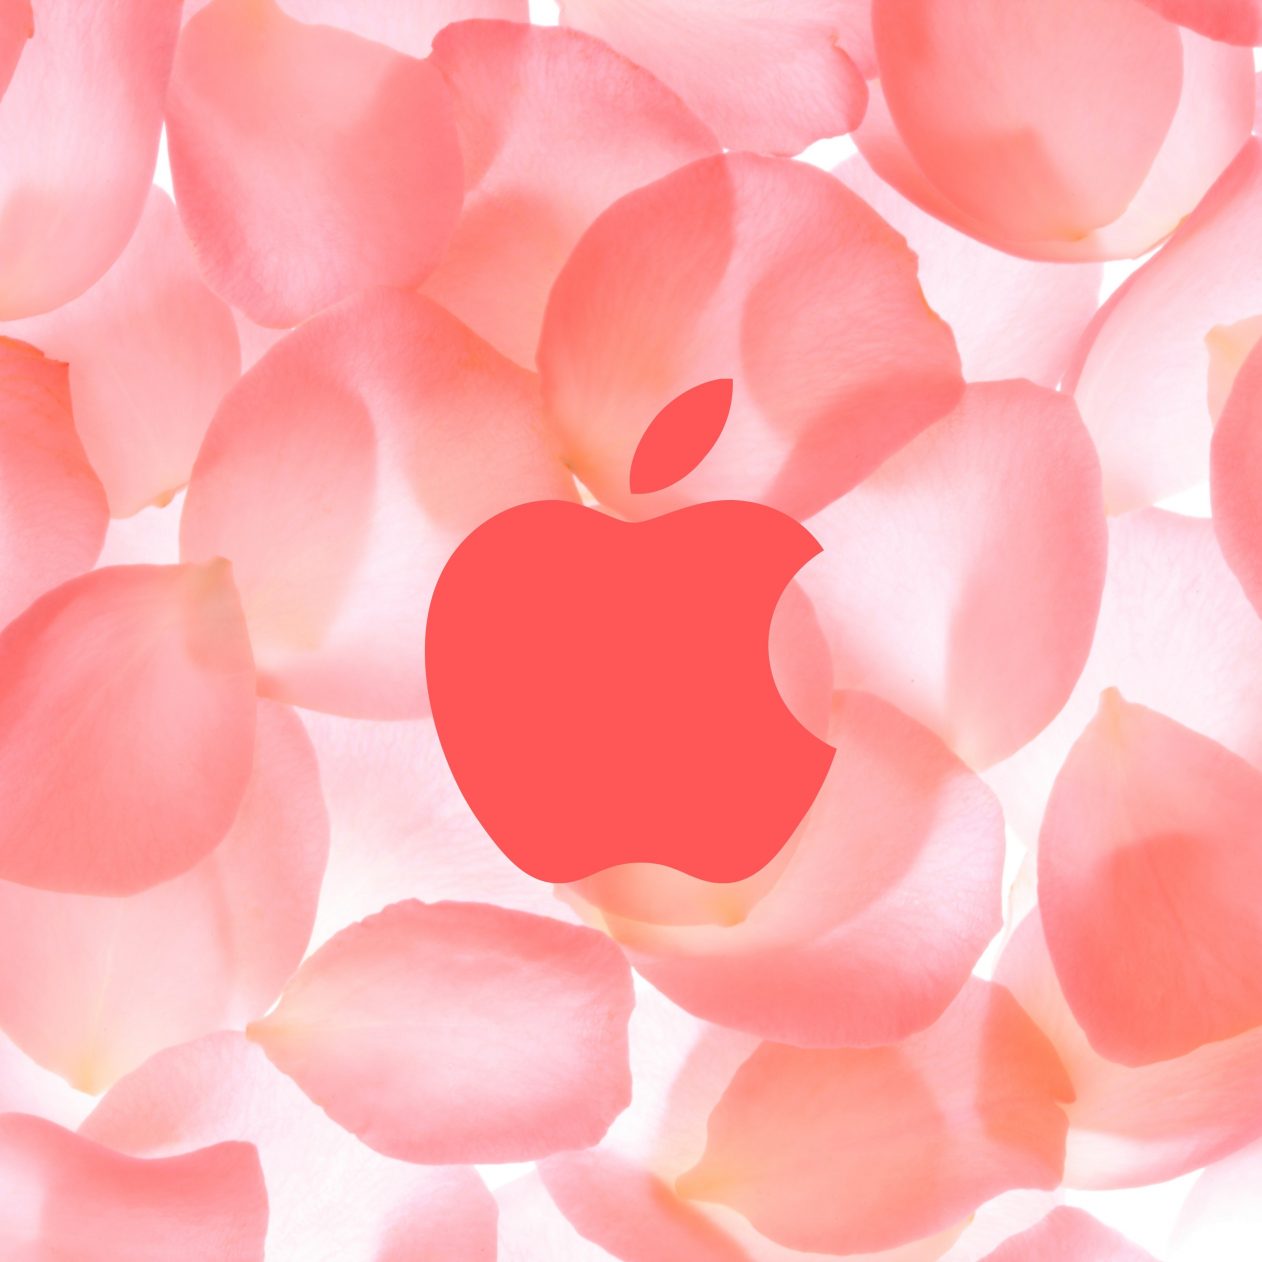 1262x1262 Parallax wallpaper 4k Apple Logo Iphone Macos Beautiful Flower Background iPad Wallpaper 1262x1262 pixels resolution